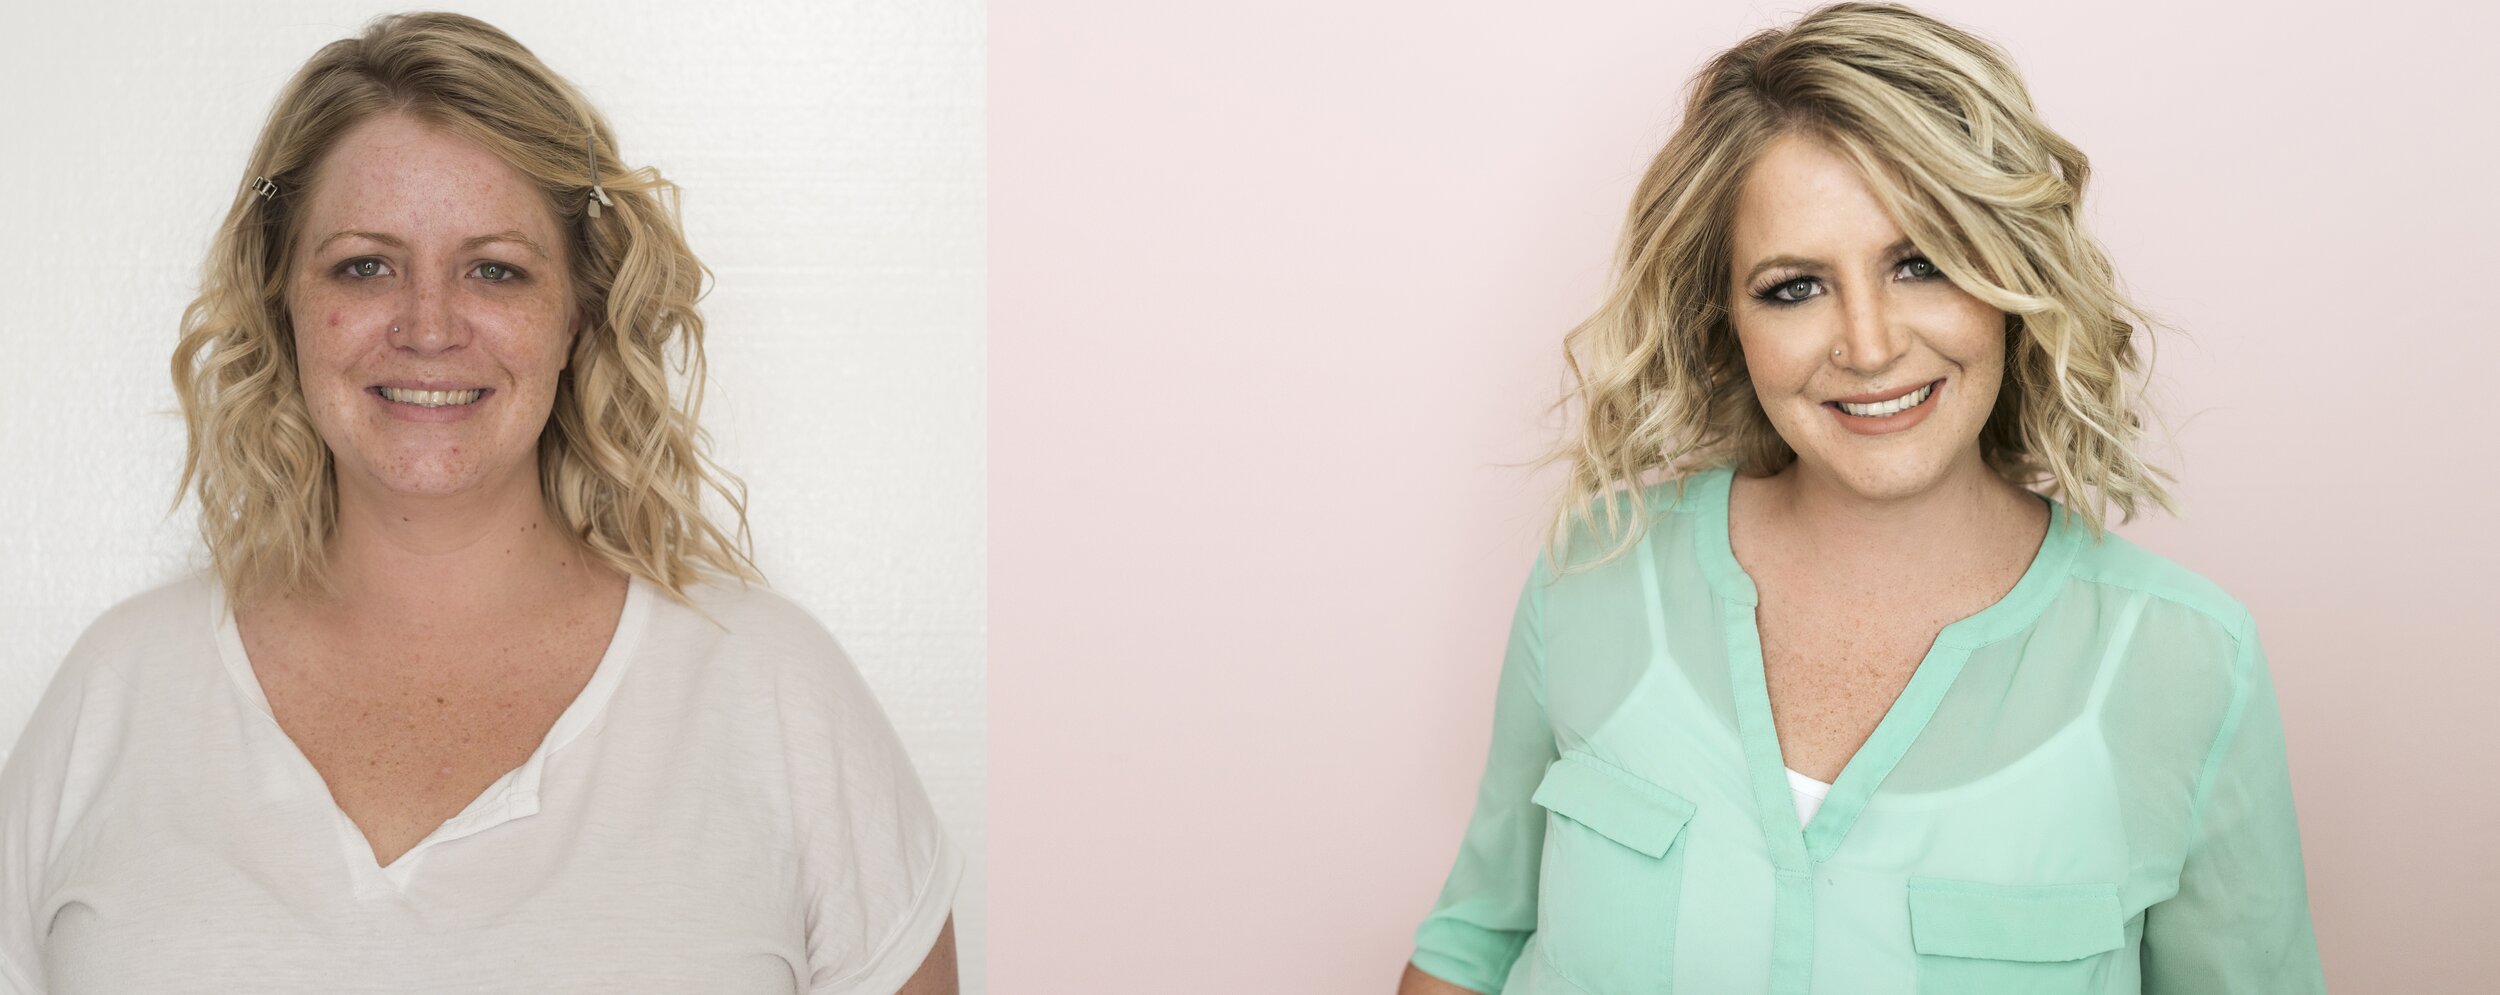 Amanda Before & After 1.jpg